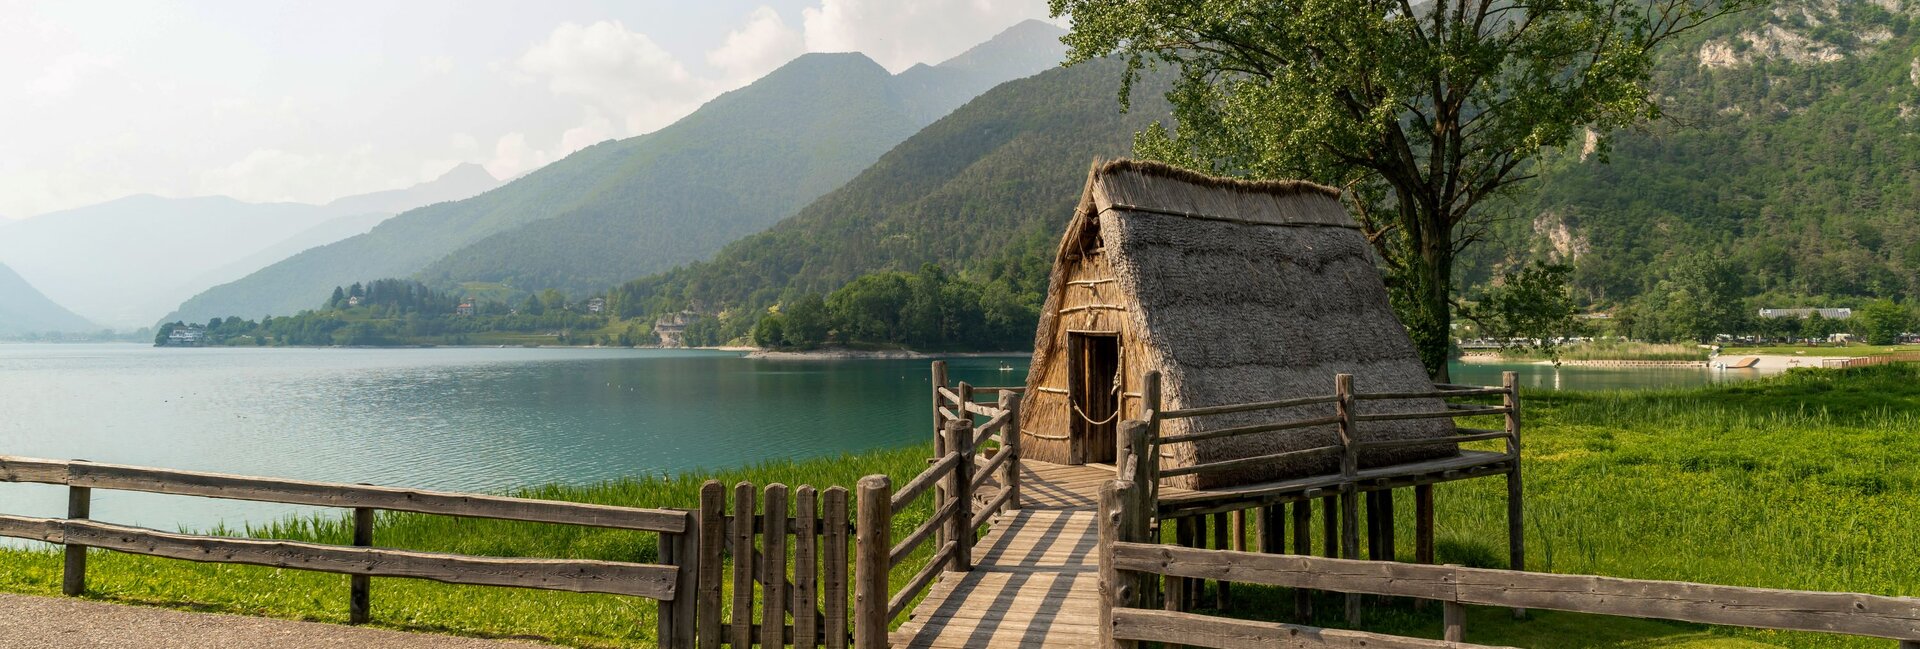 Lake Ledro Pile-dwelling Museum